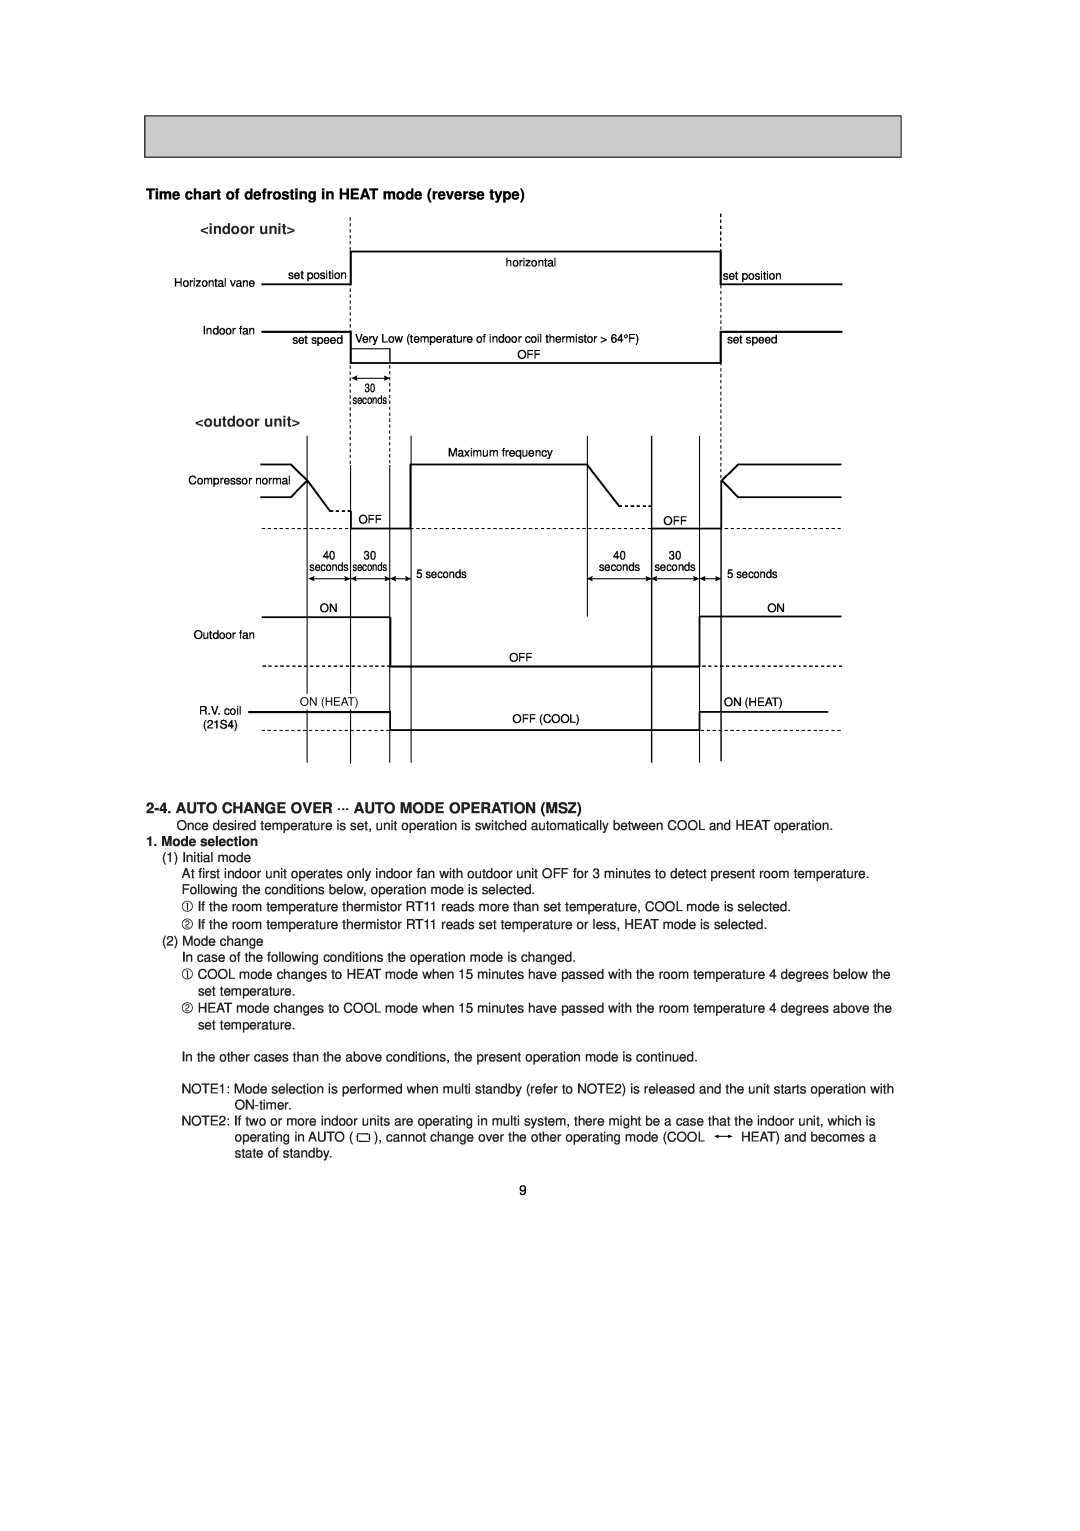 Mitsubishi Electronics MUY-ANA, MS-AWA, MU-AWA Time chart of defrosting in HEAT mode reverse type indoor unit, outdoor unit 